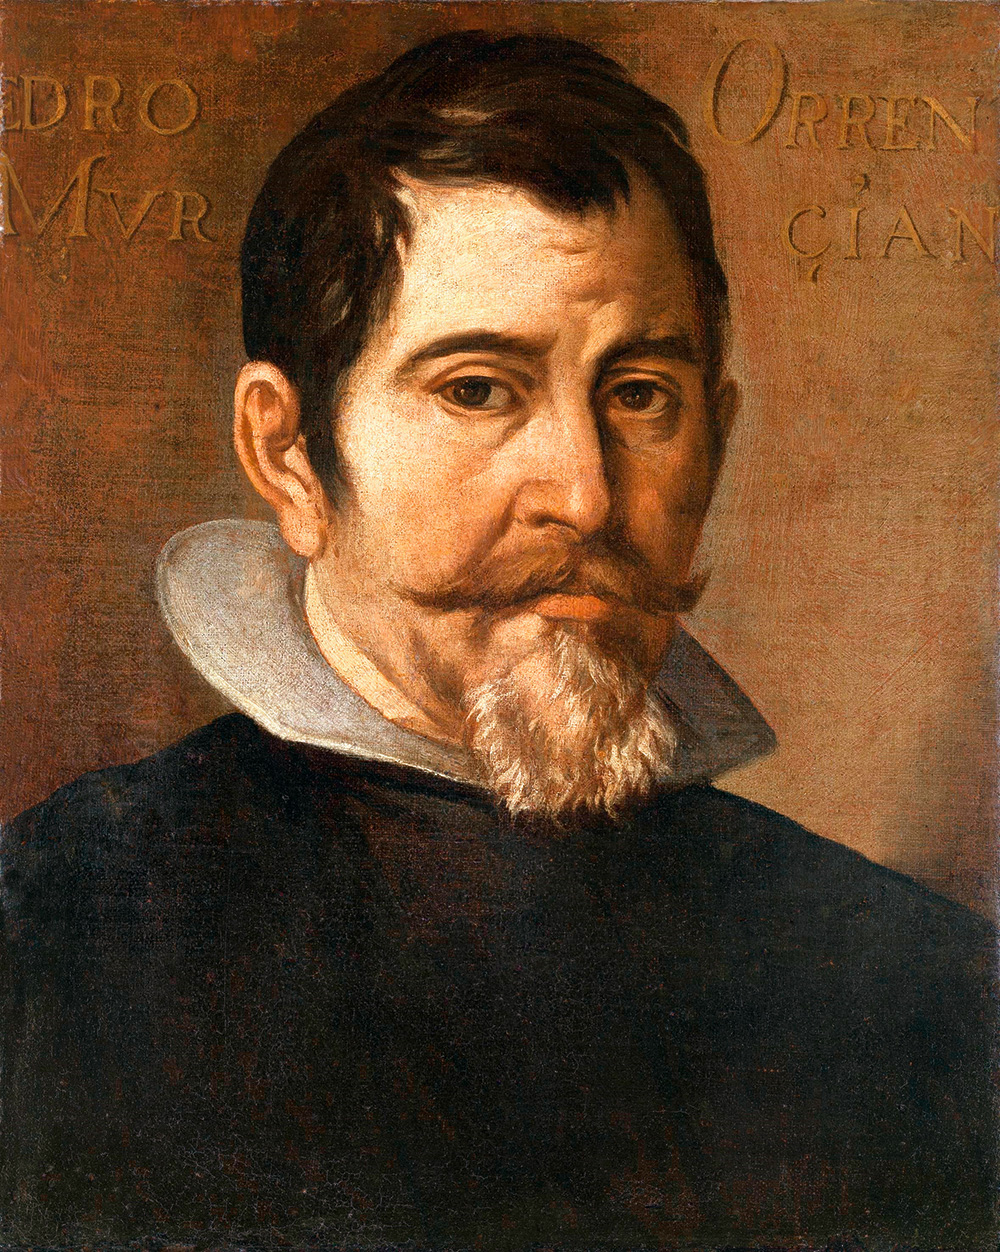 Pedro de Orrente önarcképe, 1620-as évek